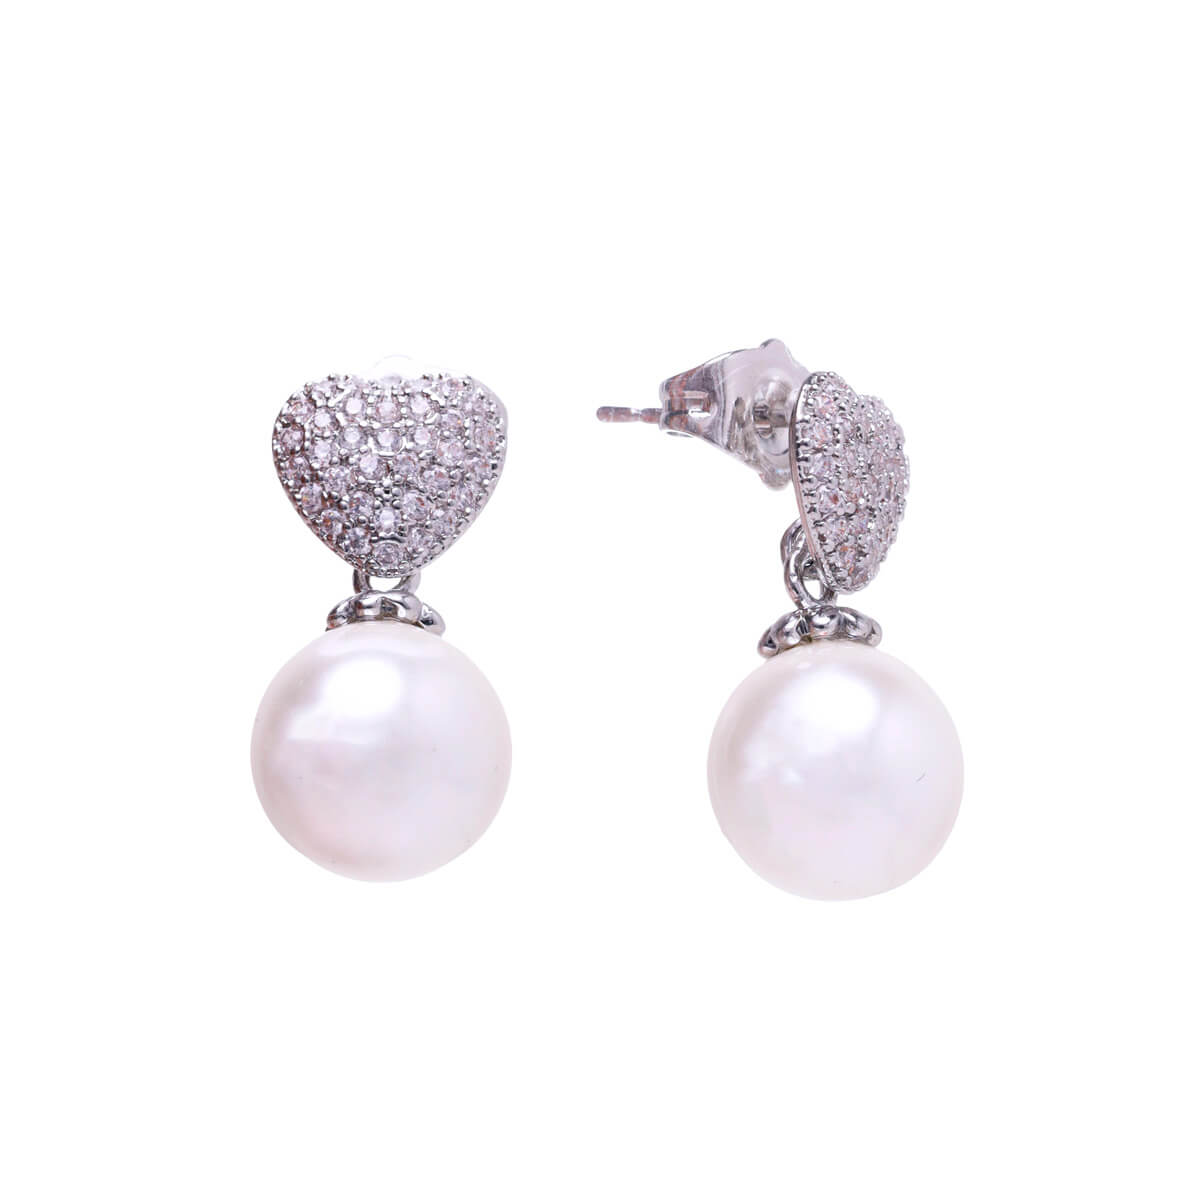 Heart bead earrings with zirconia stones